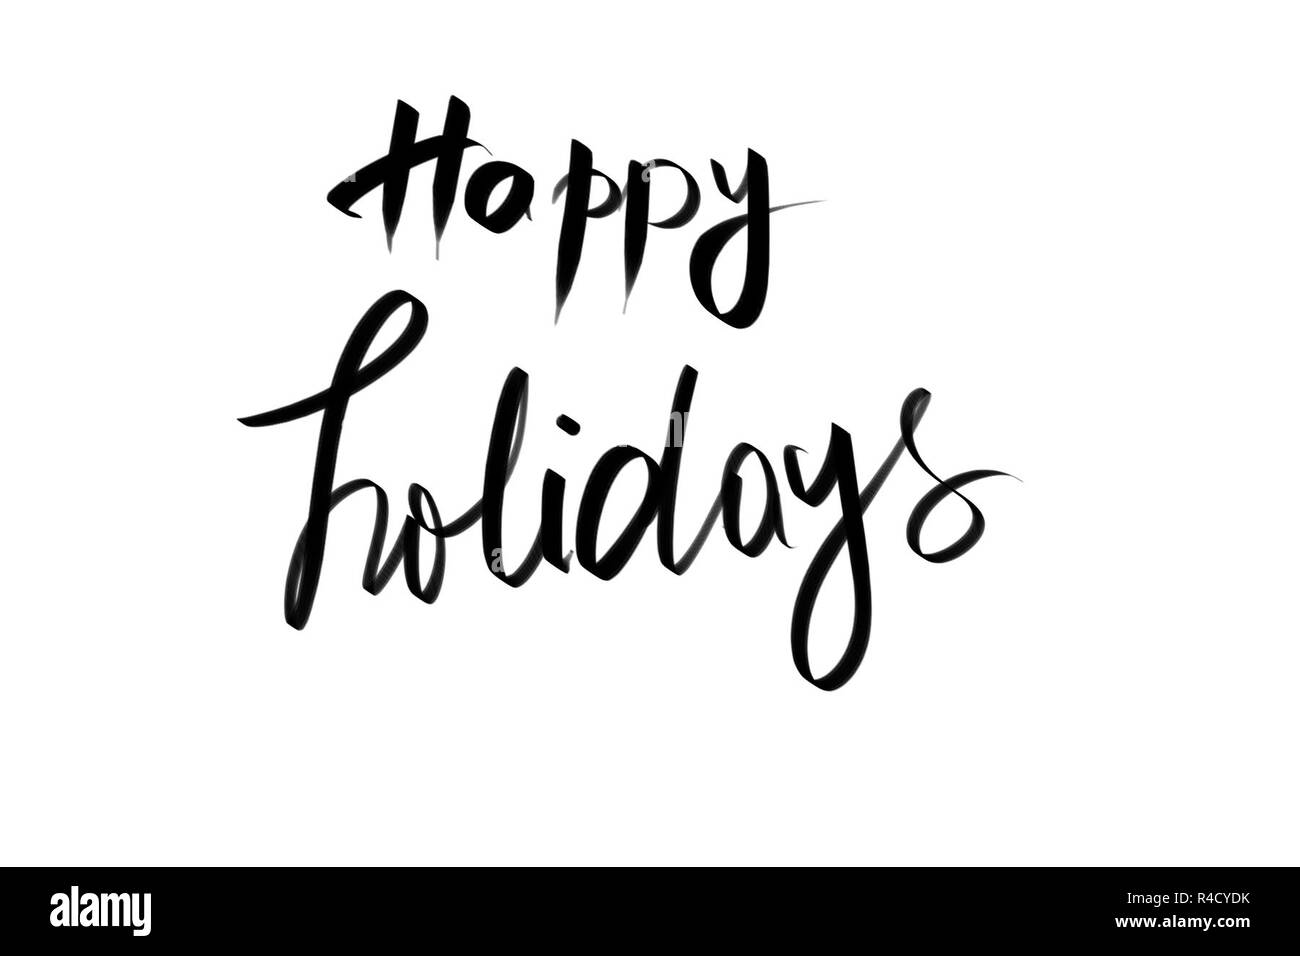 Happy Holidays Greeting Stock Photo - Alamy